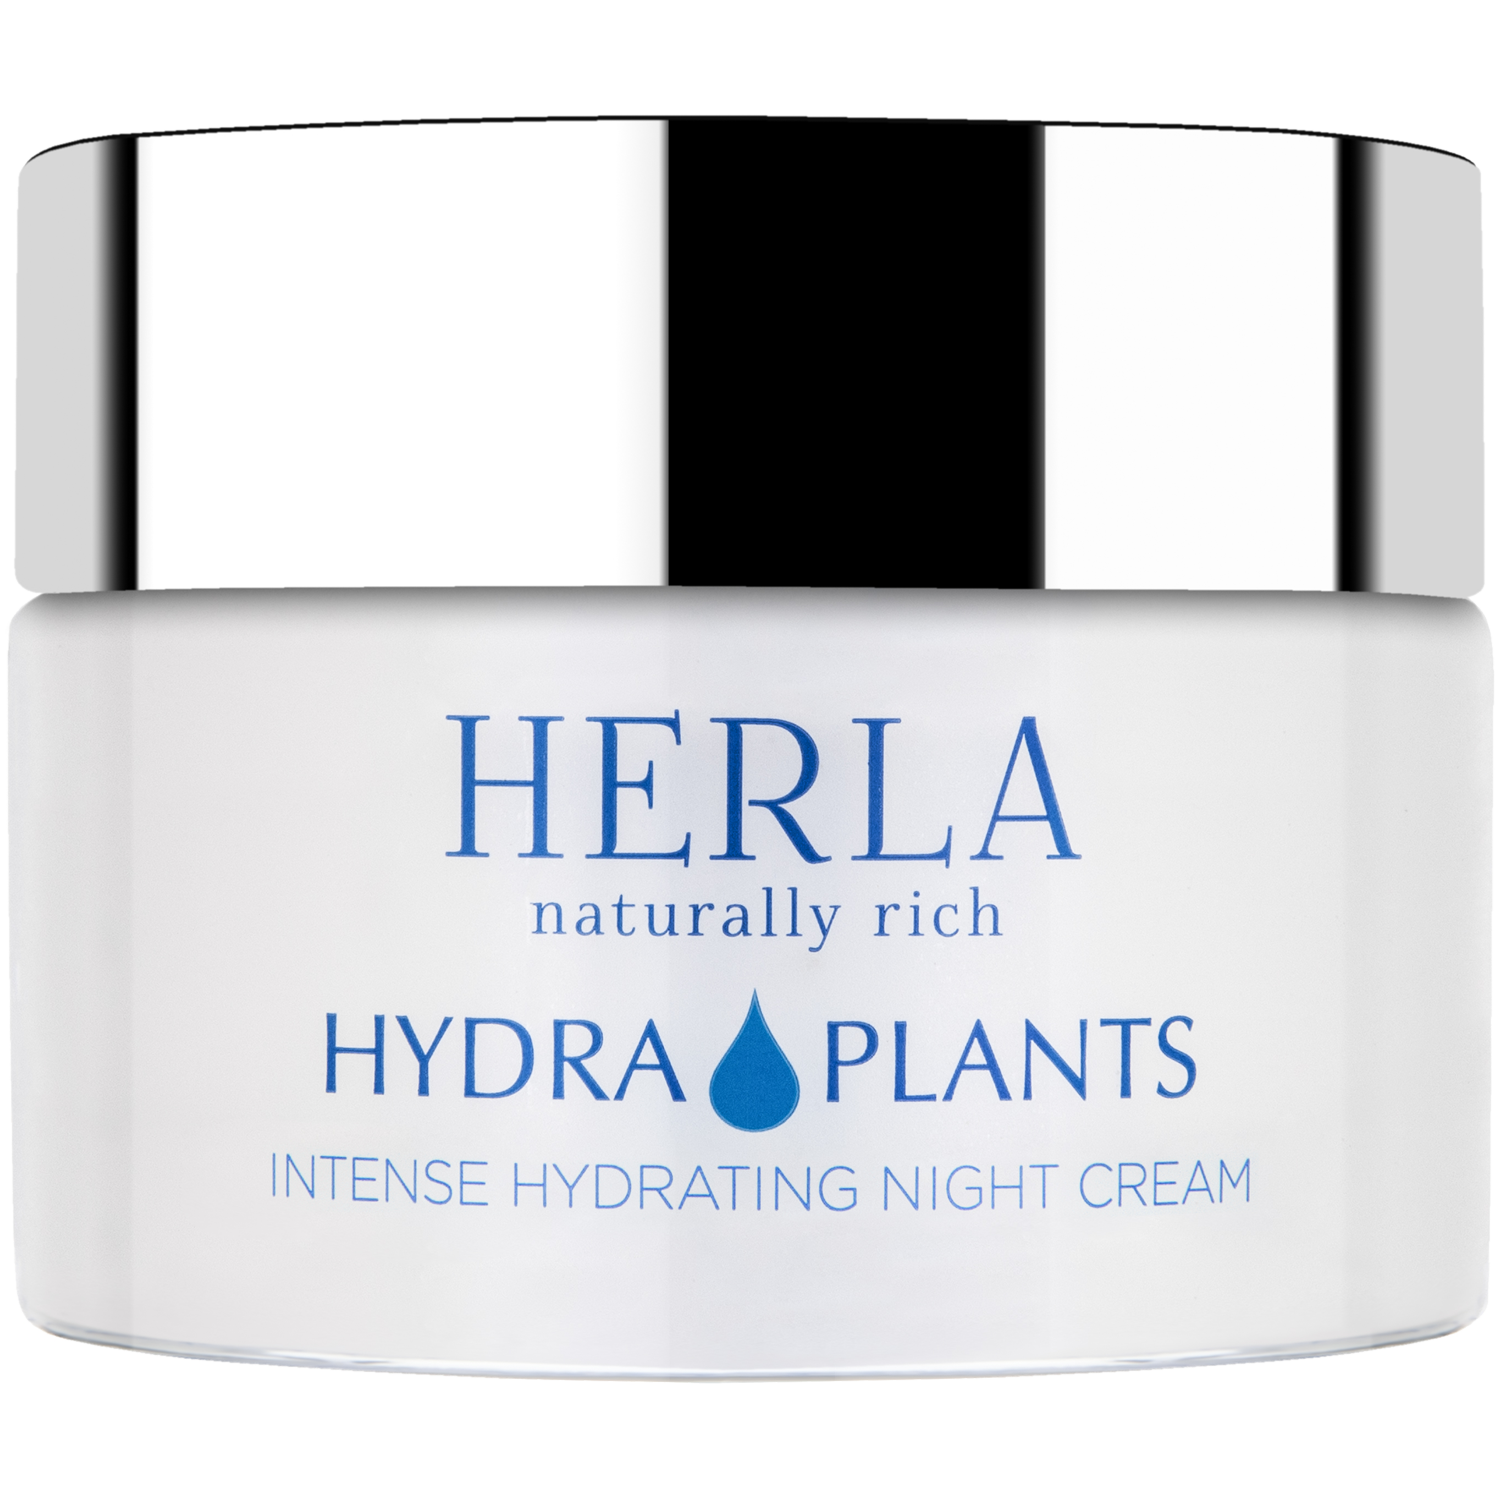 Herla Hydra Plants Limited Edition